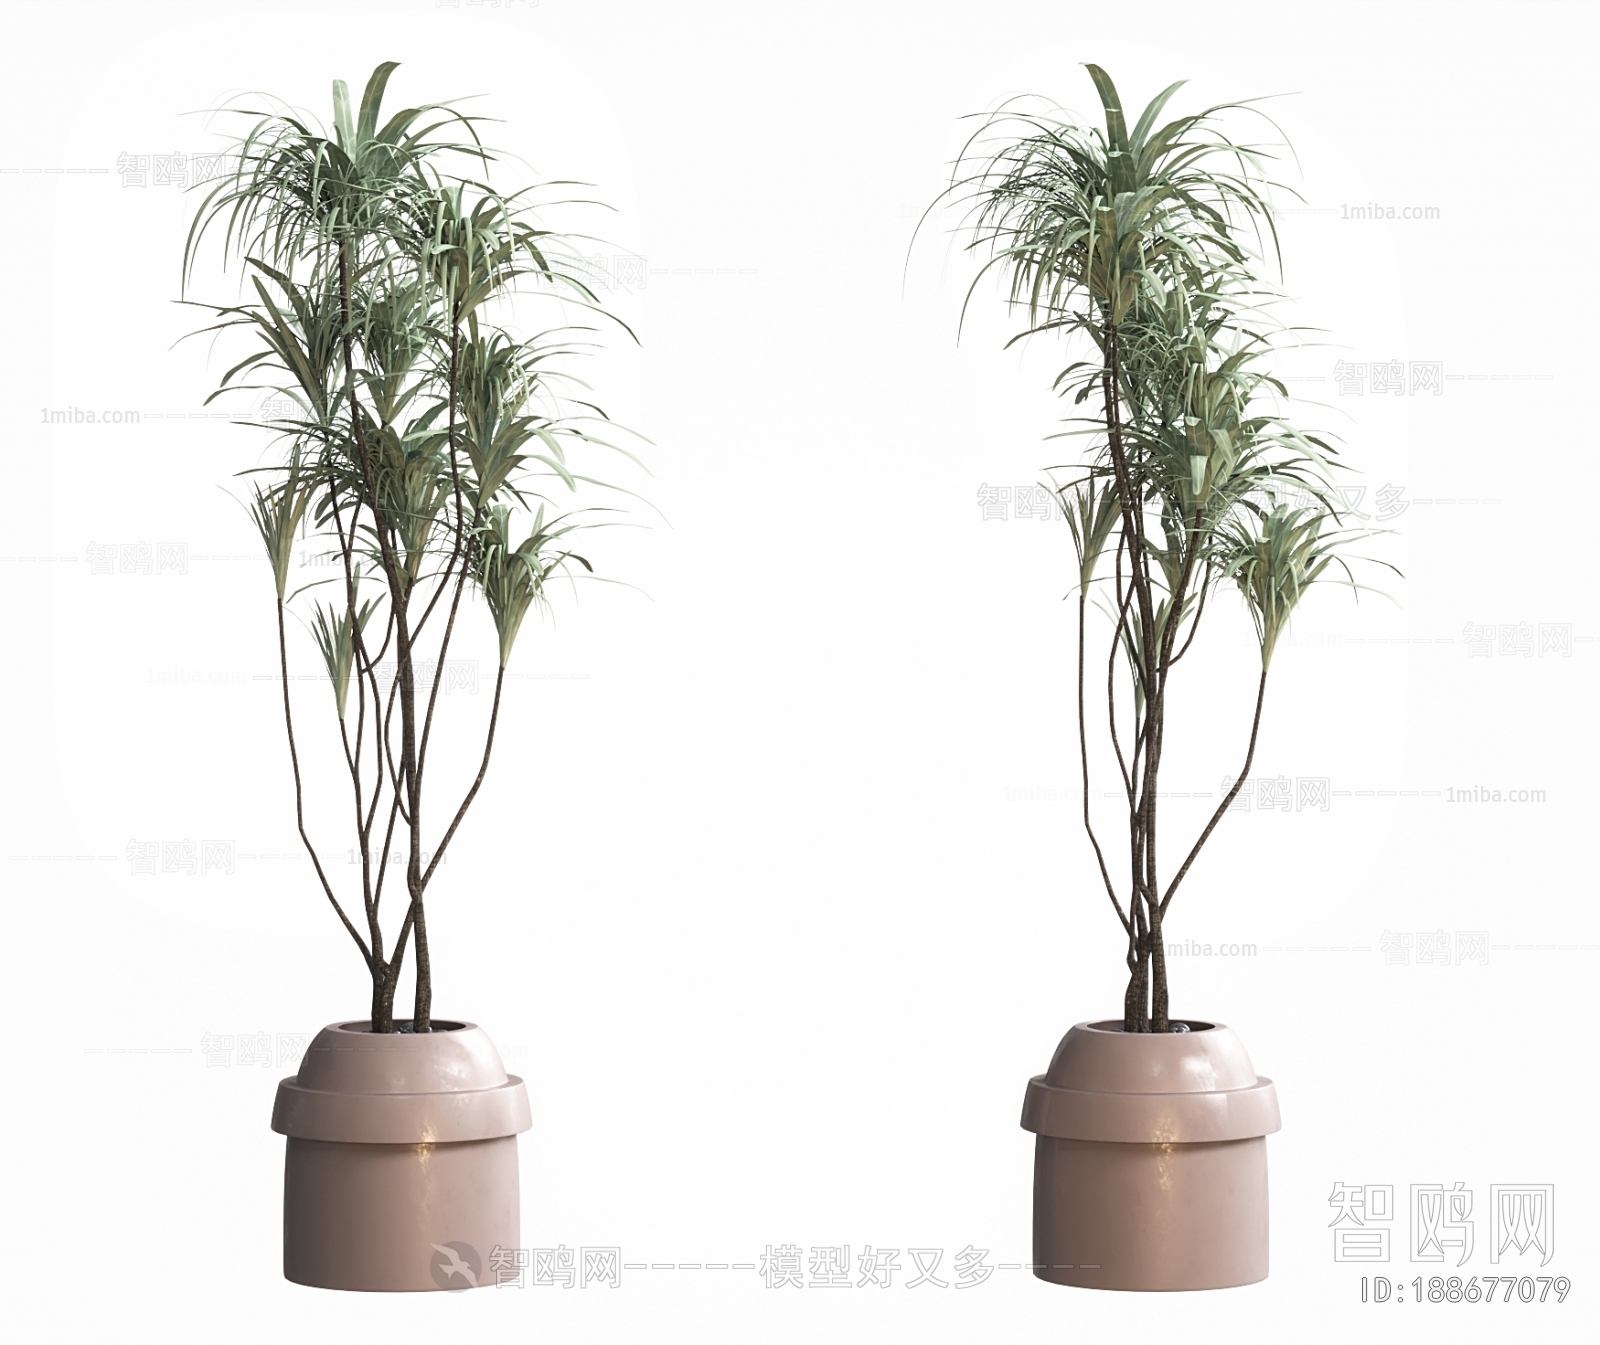 Wabi-sabi Style Potted Green Plant